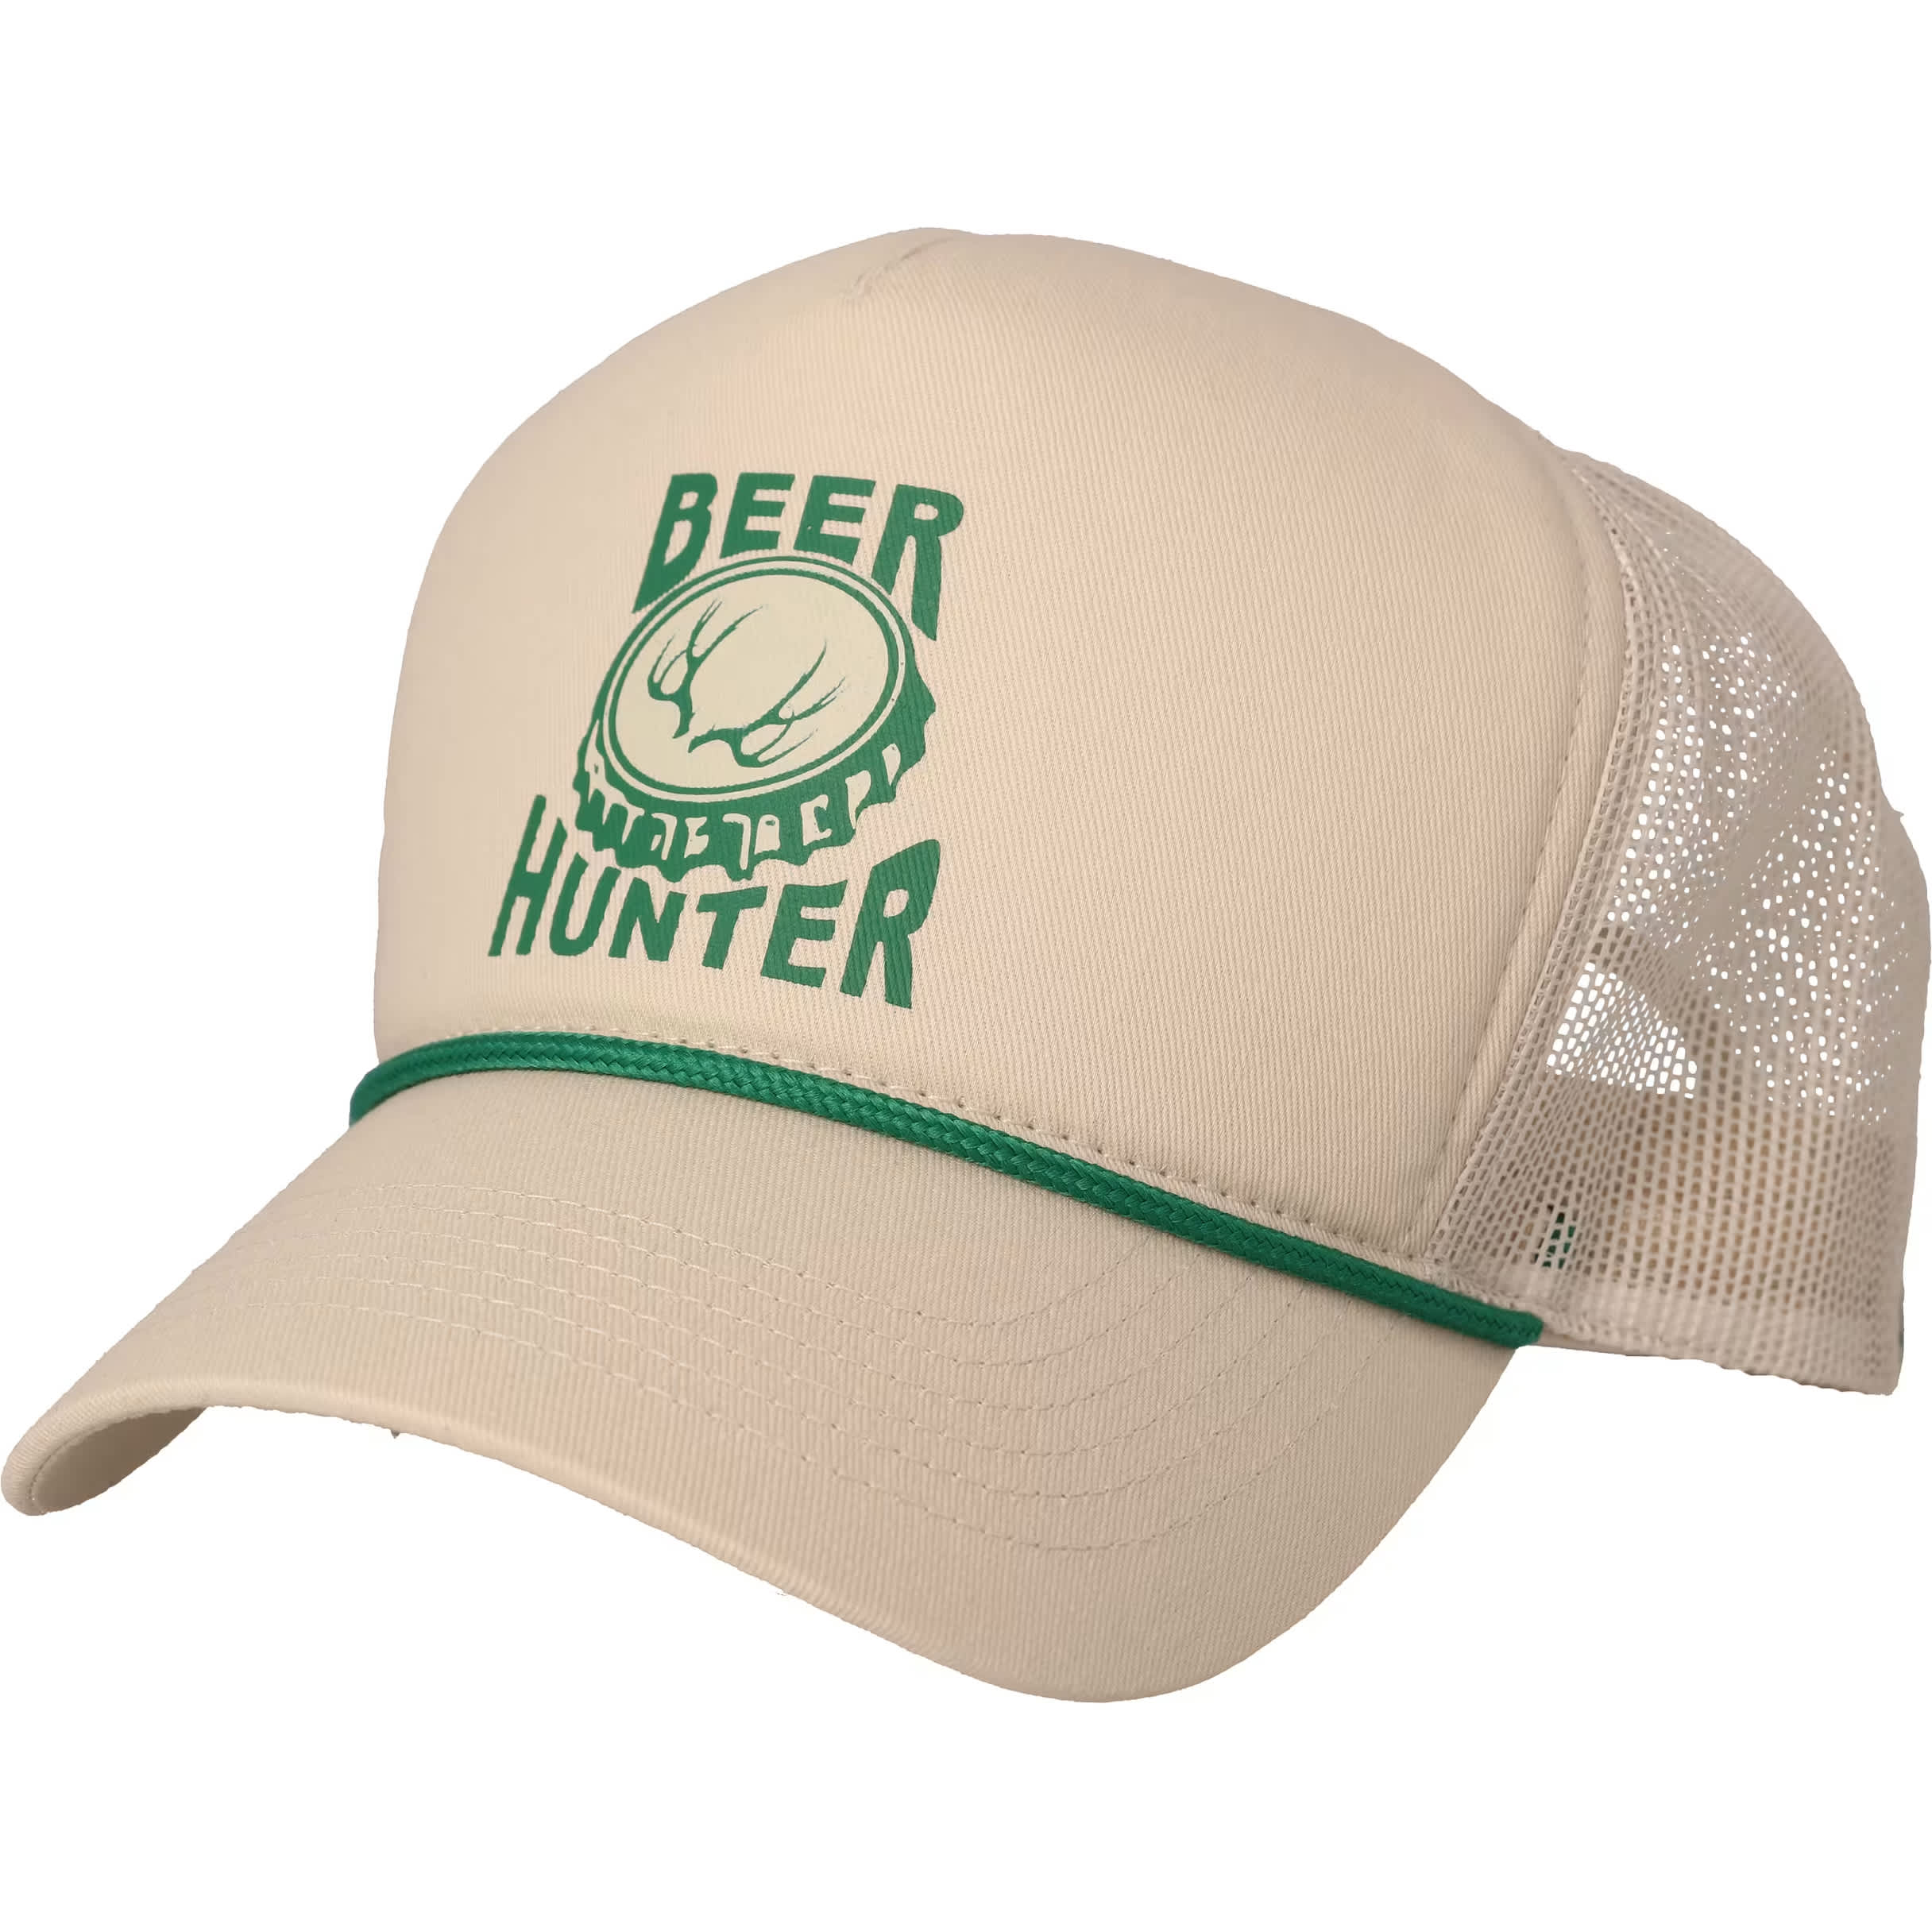 Bass Pro Shops® Men’s Beer Hunter Snapback Cap